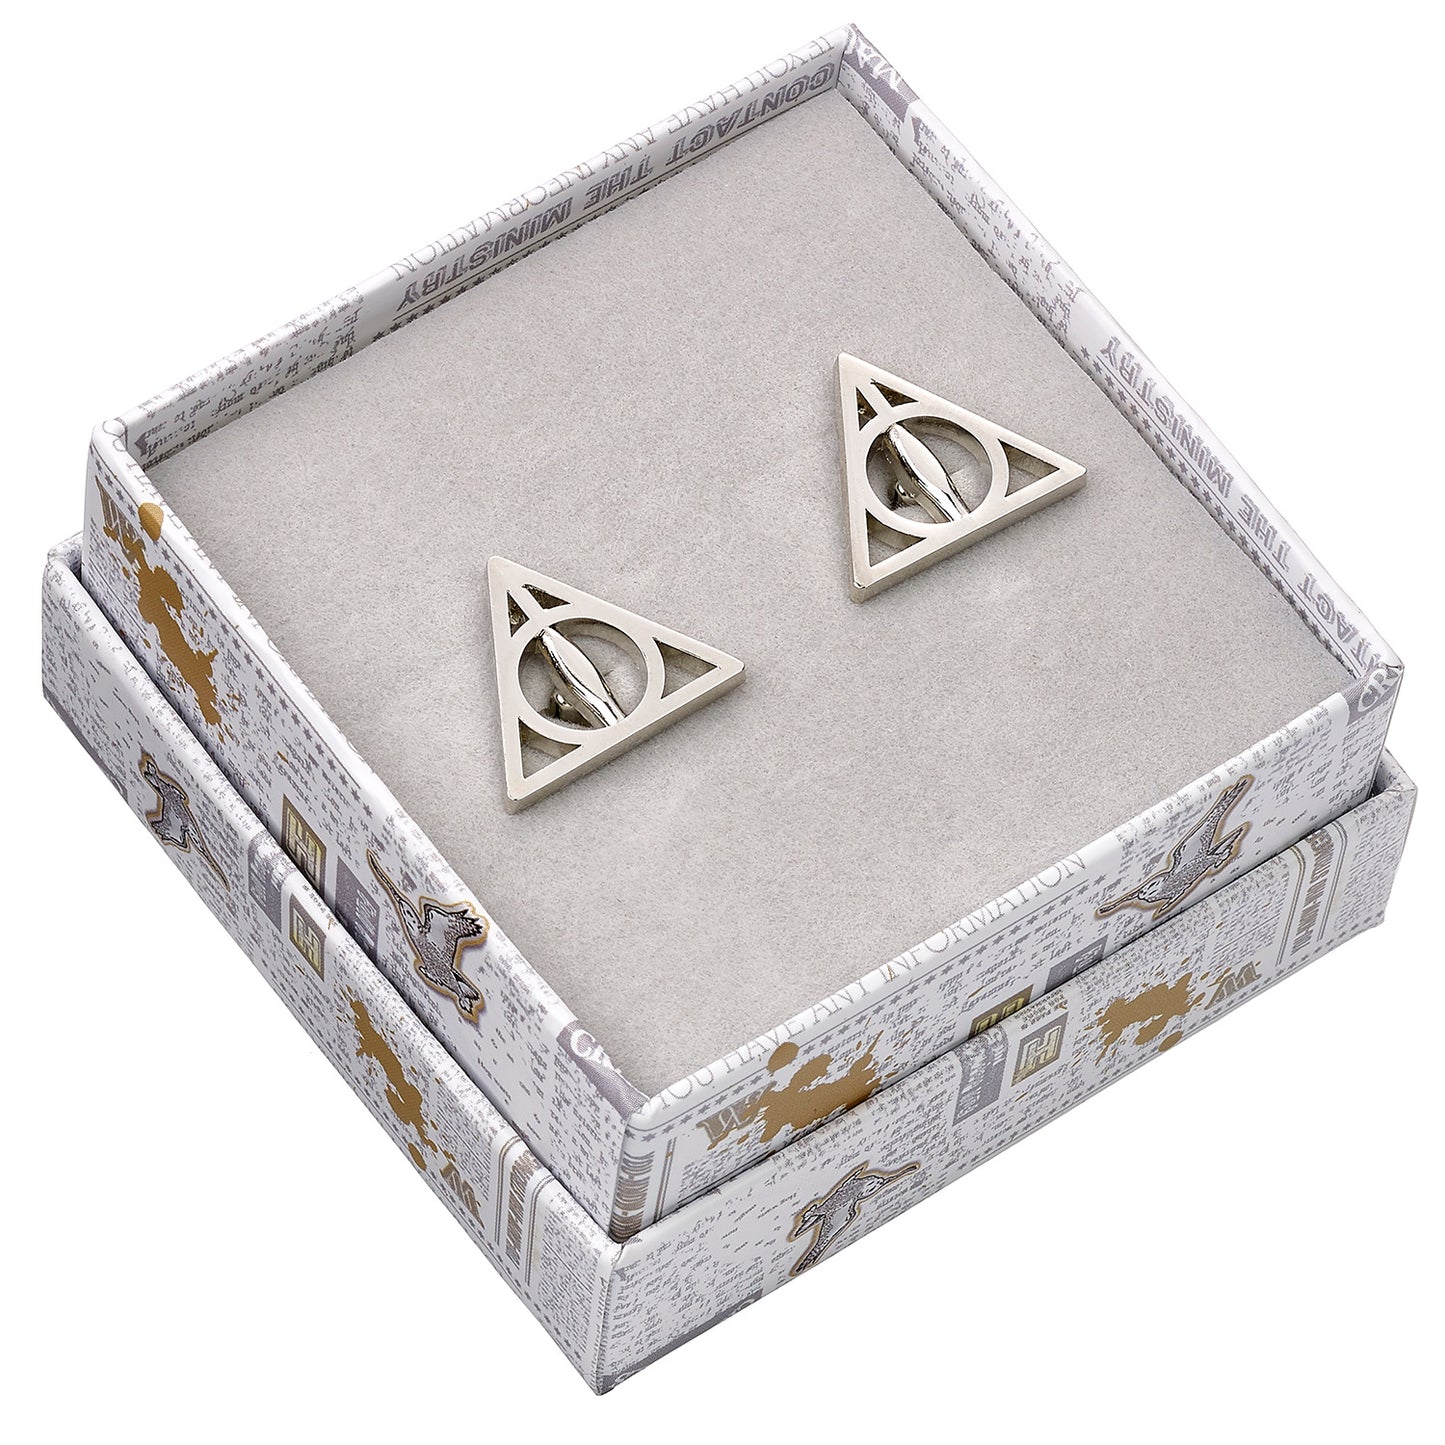 Harry Potter Men's Deathly Hallows Cufflinks - Silver